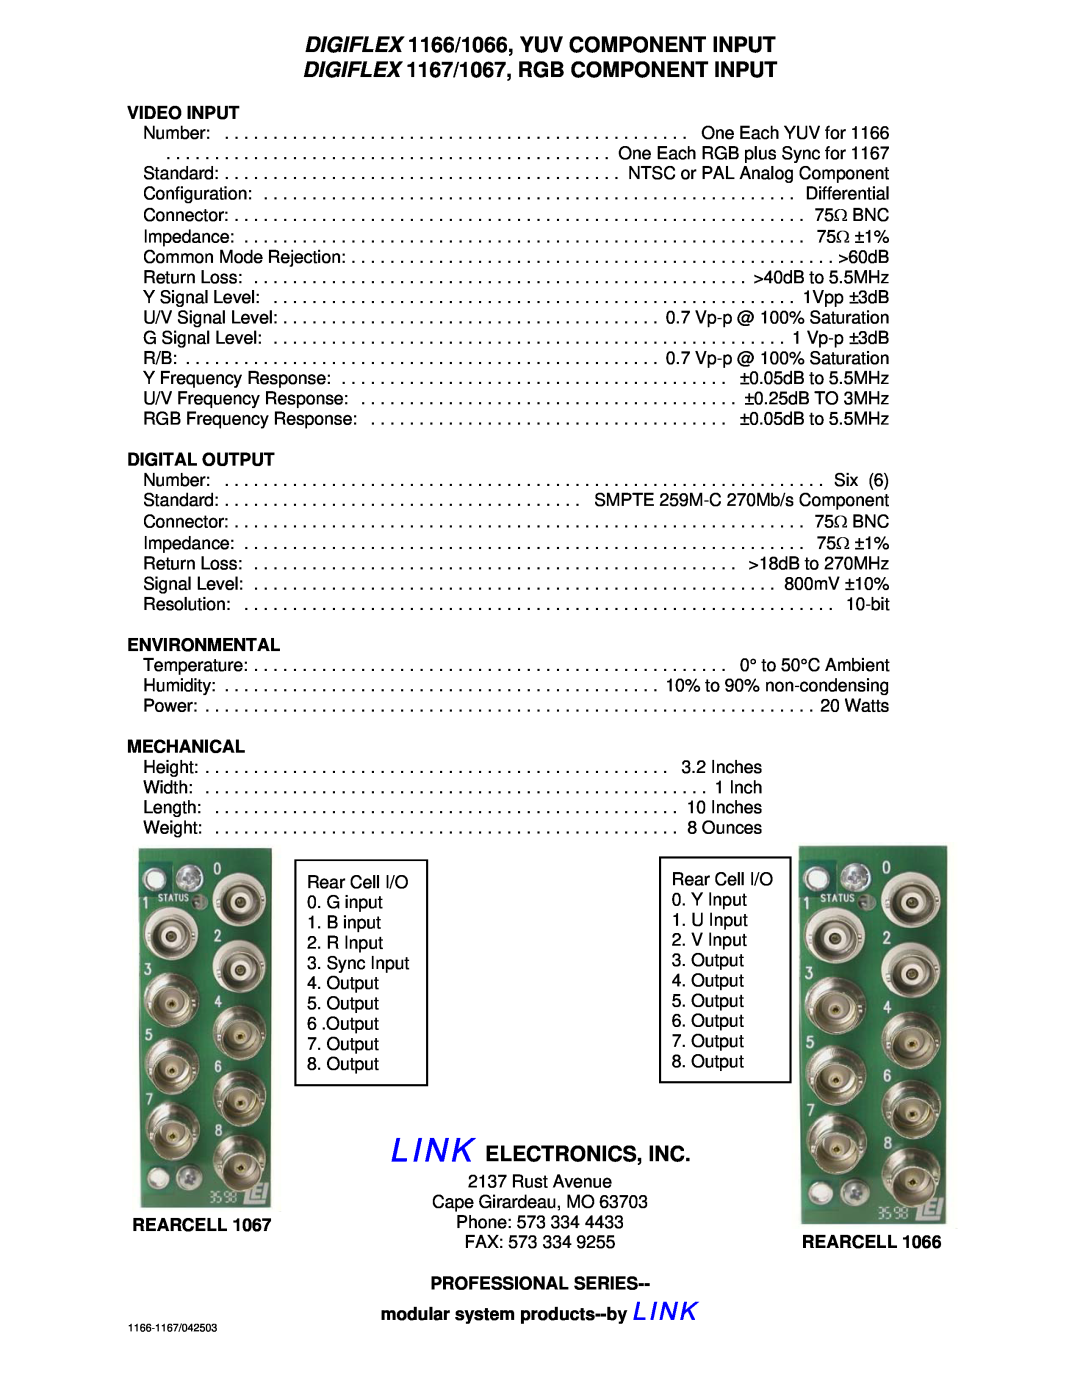 Link electronic DIGIFLEX 1166/1066, YUV COMPONENT INPUT, DIGIFLEX 1167/1067, RGB COMPONENT INPUT, Link Electronics, Inc 